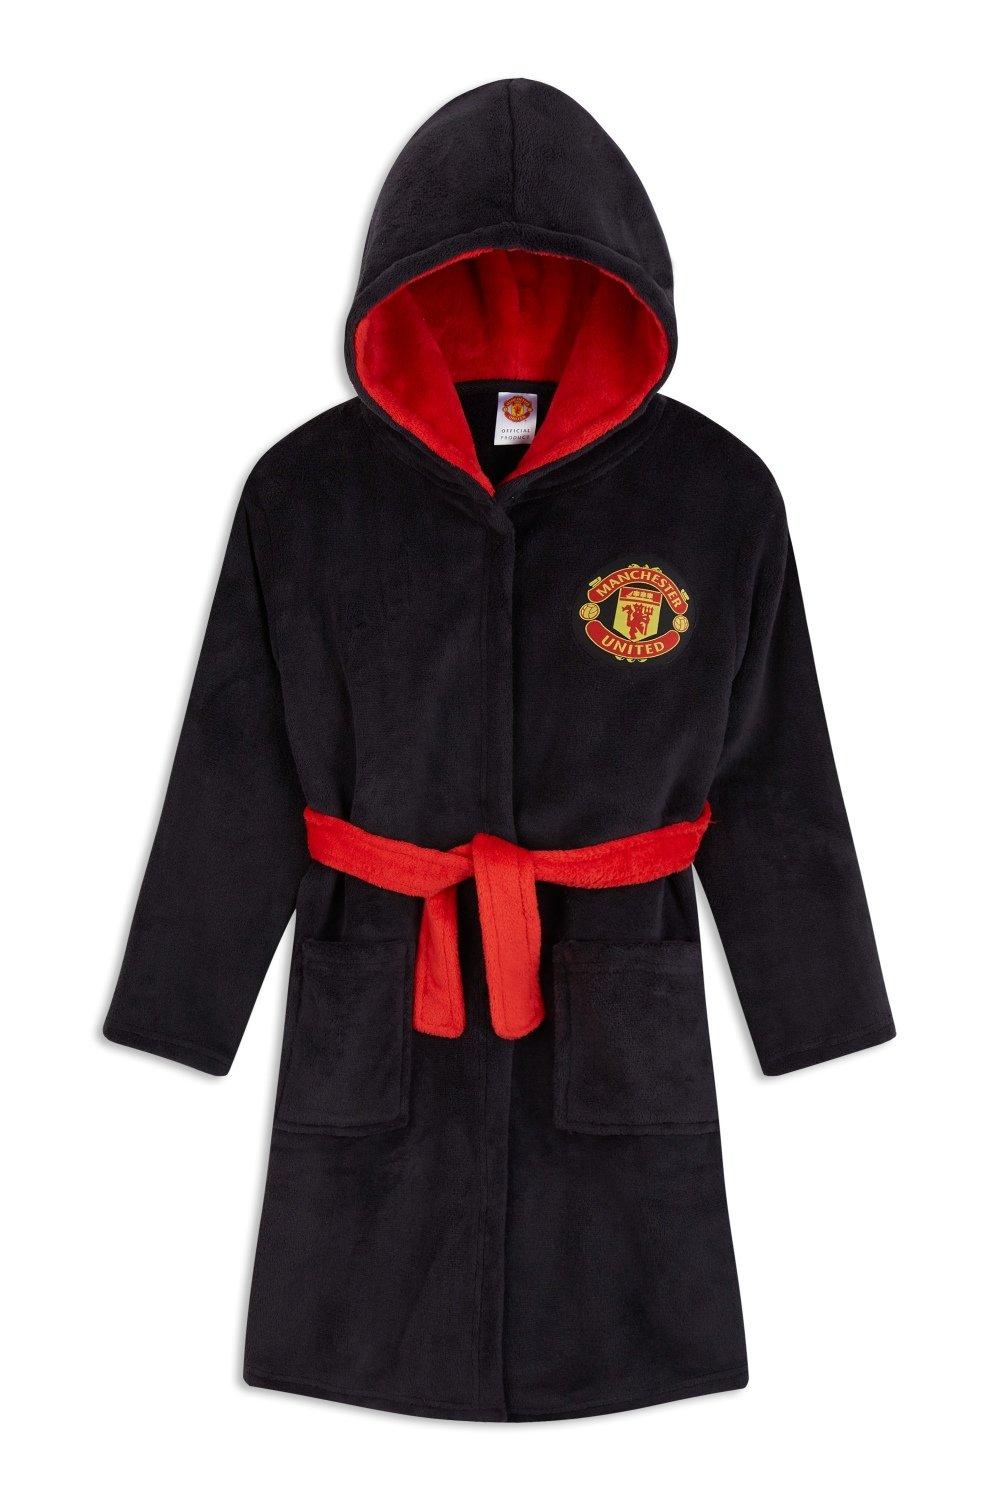 Manchester United Crest Dressing Gown - Grey/Black - Boys